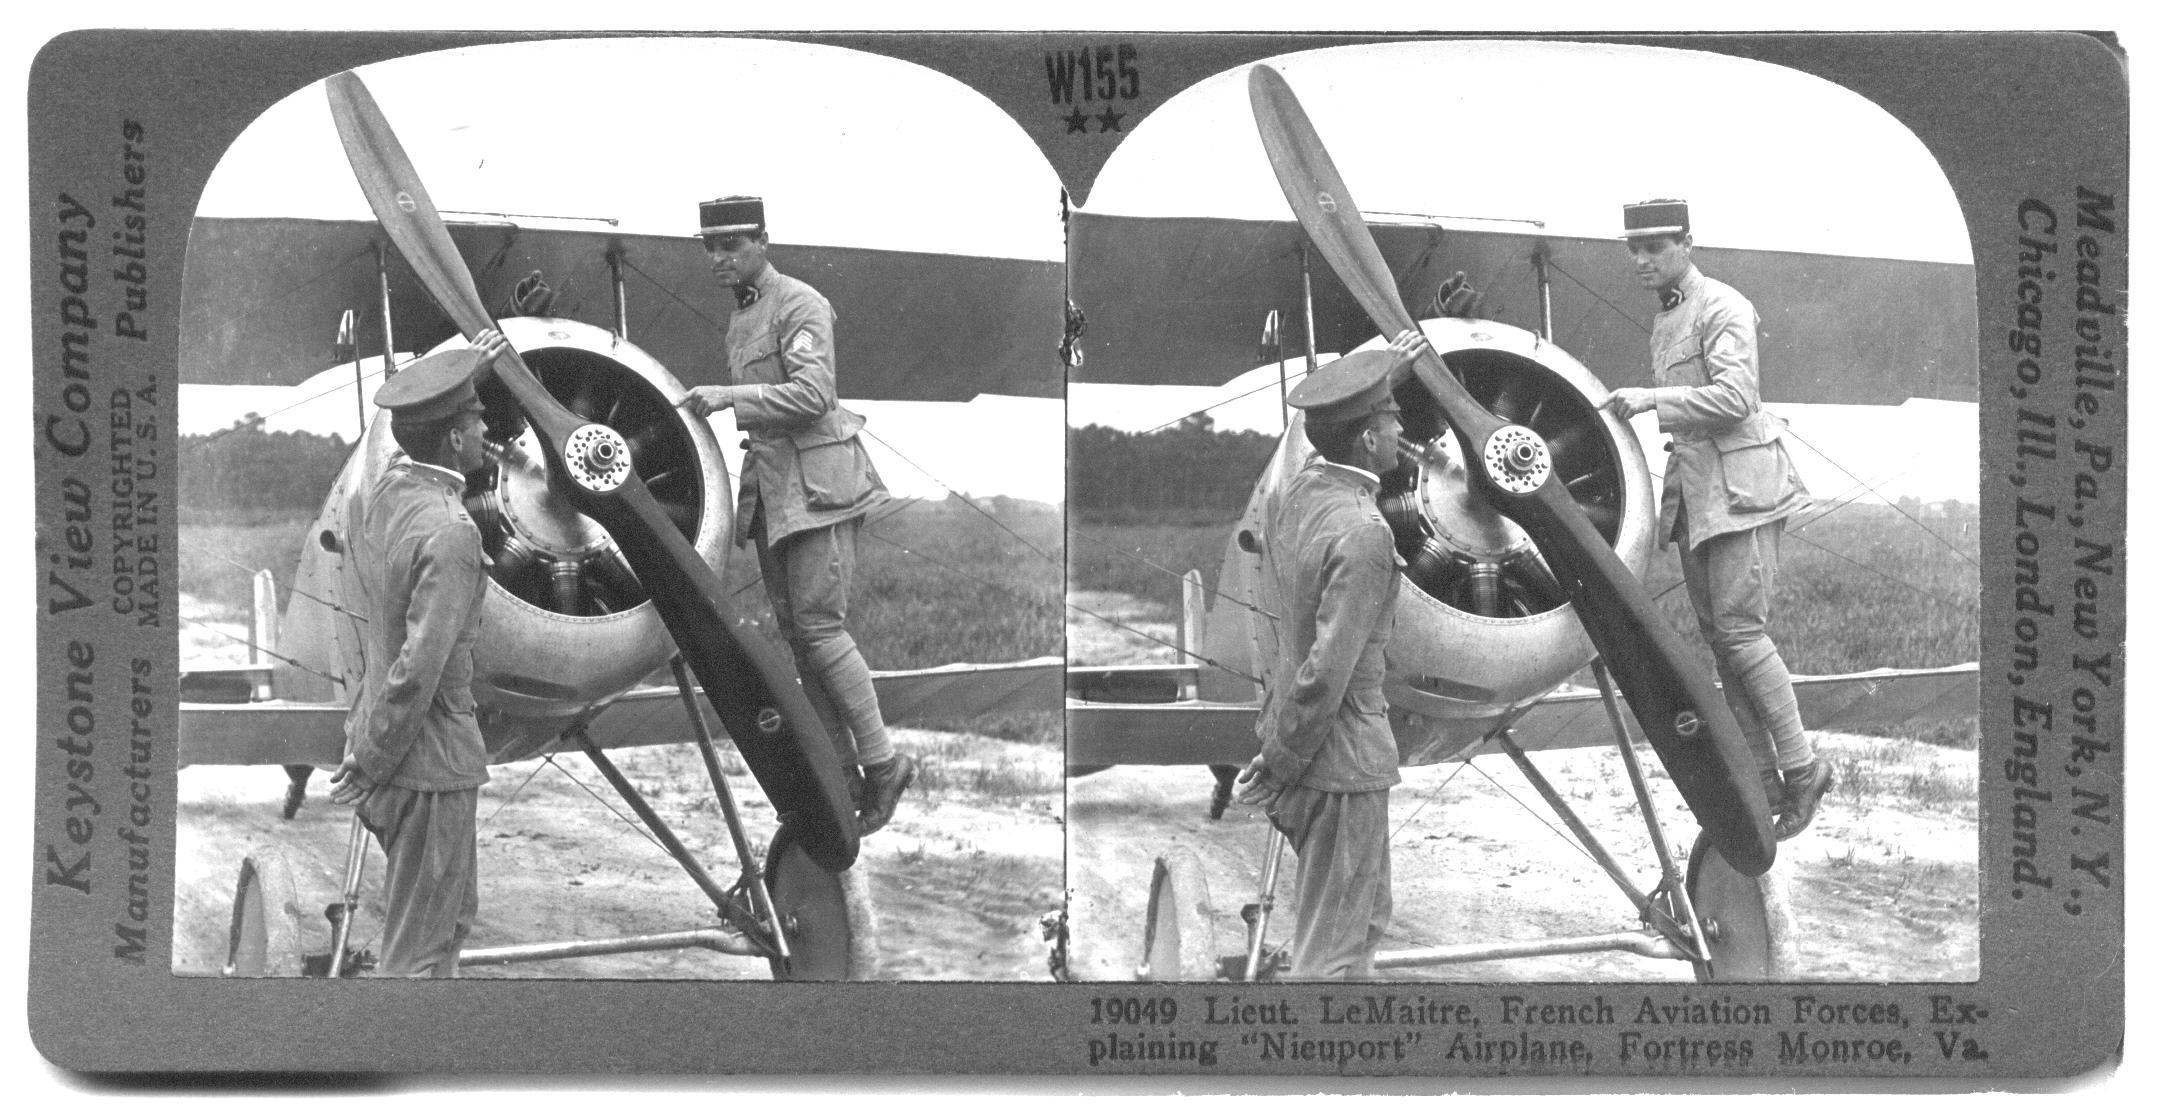 Lieut. LeMaitre of French Aviation Forces, Explaining "Nieuport" Airplane, Fortress Monroe,Va.